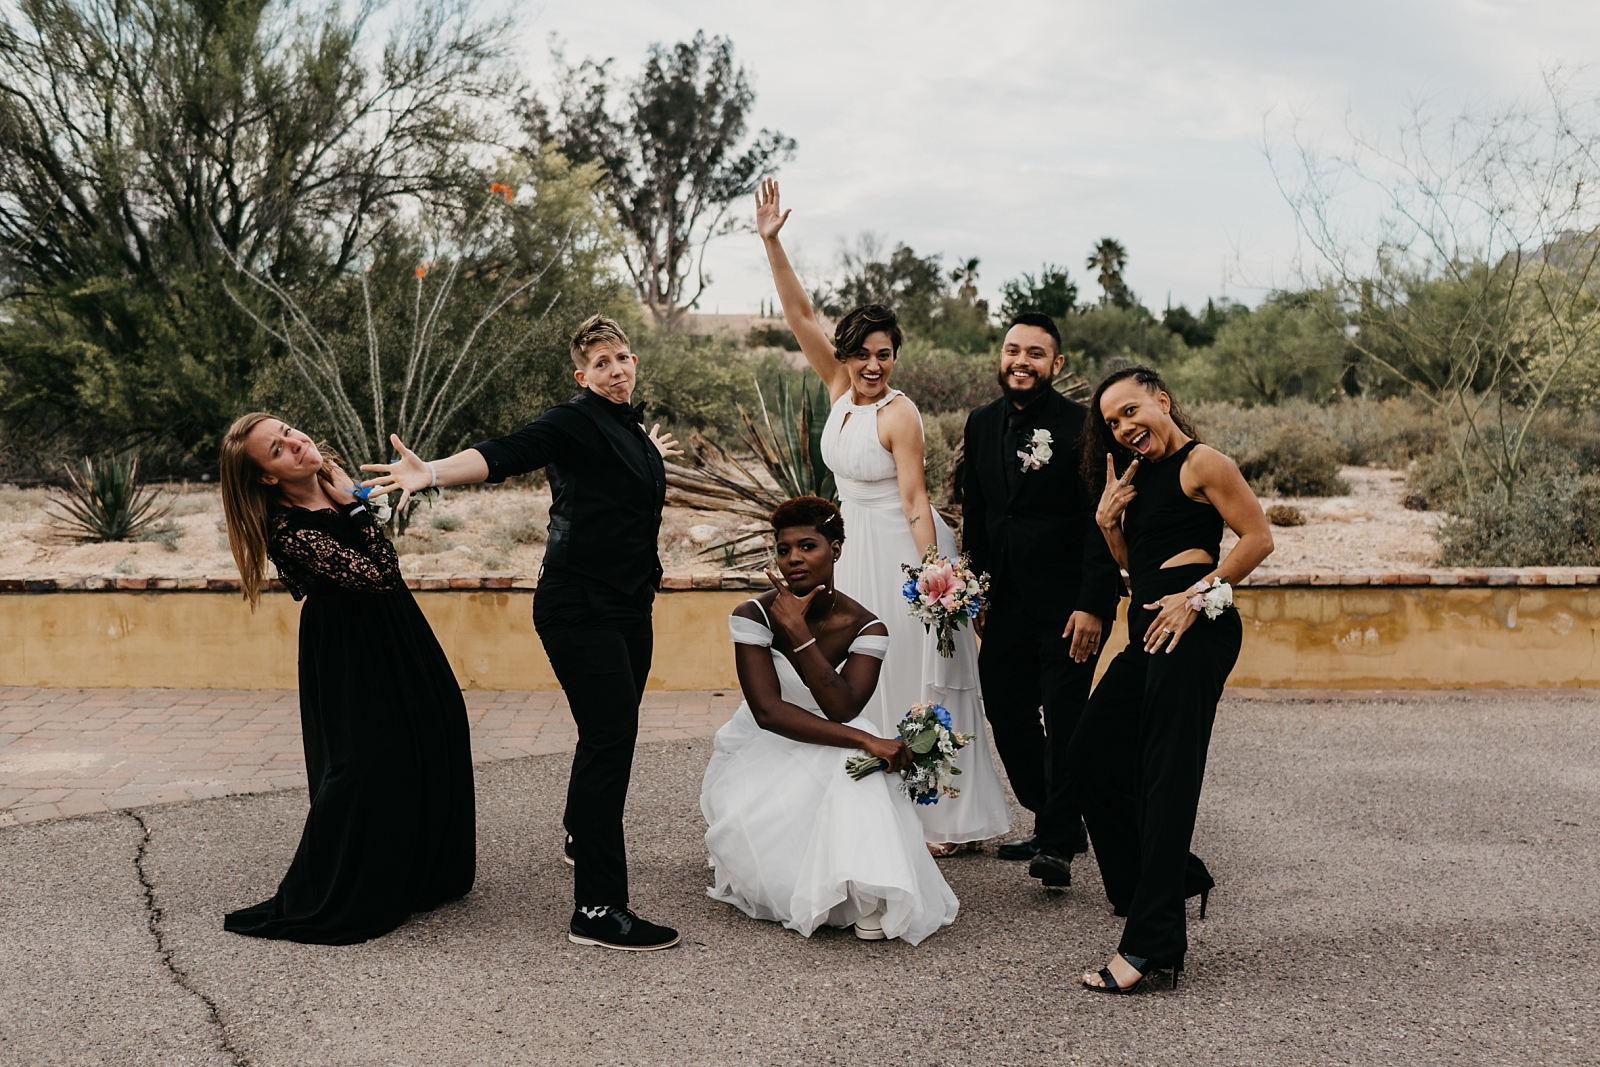 fun lgbtqa wedding party photos Tucson AZ wedding photographer Samantha Patri Photography